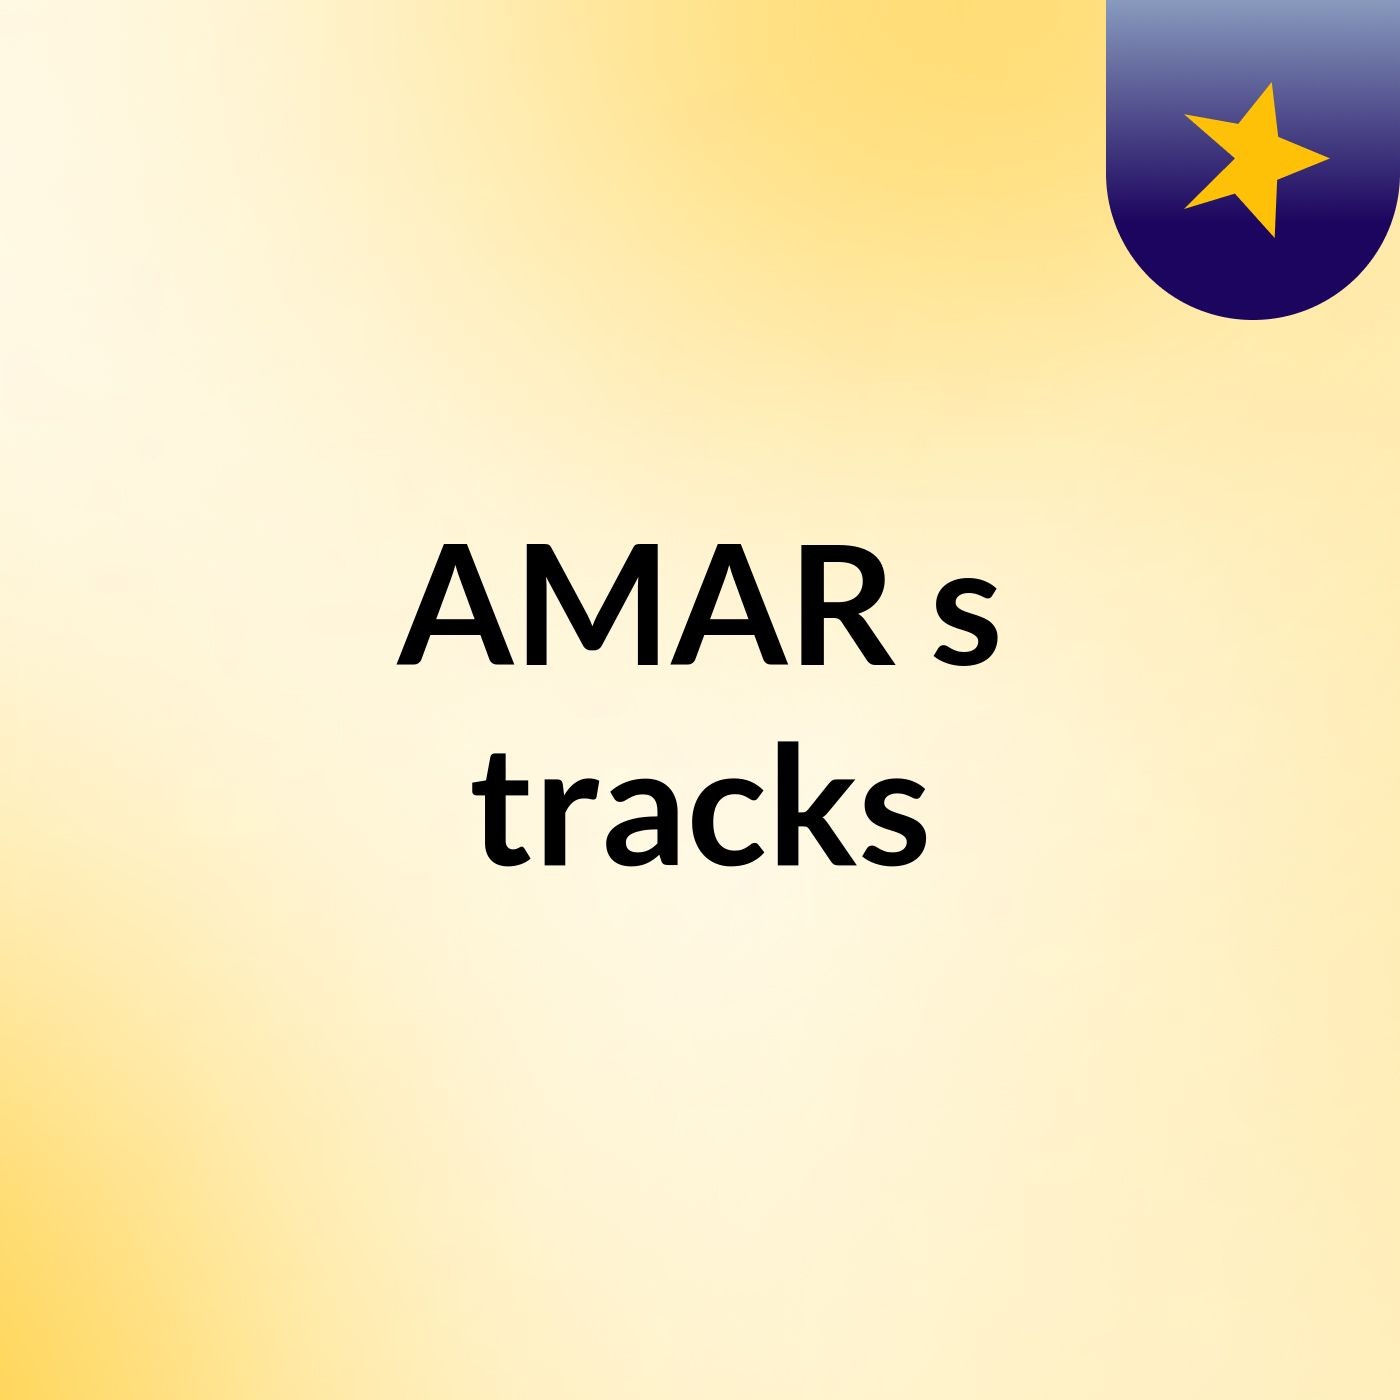 AMAR's tracks